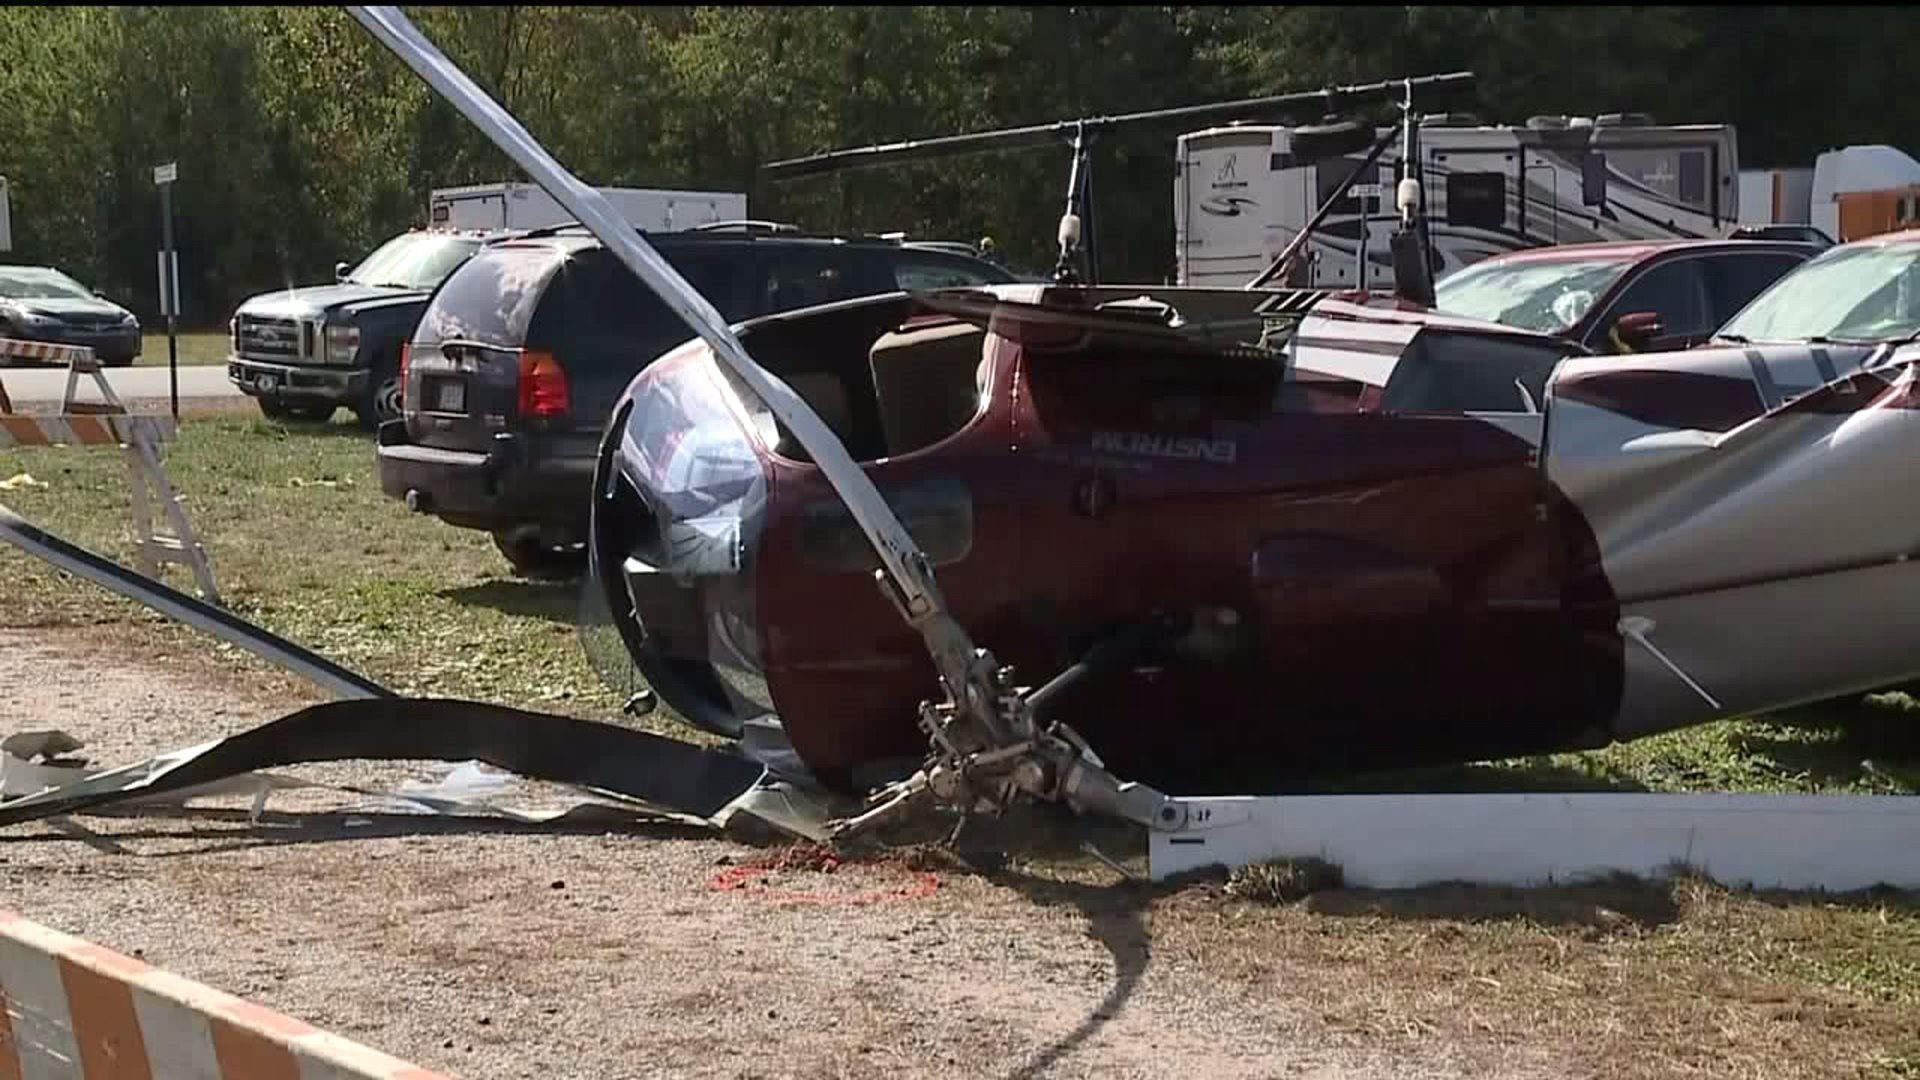 Bloomsburg Fair Officials Consider Helicopter Ban After Crash